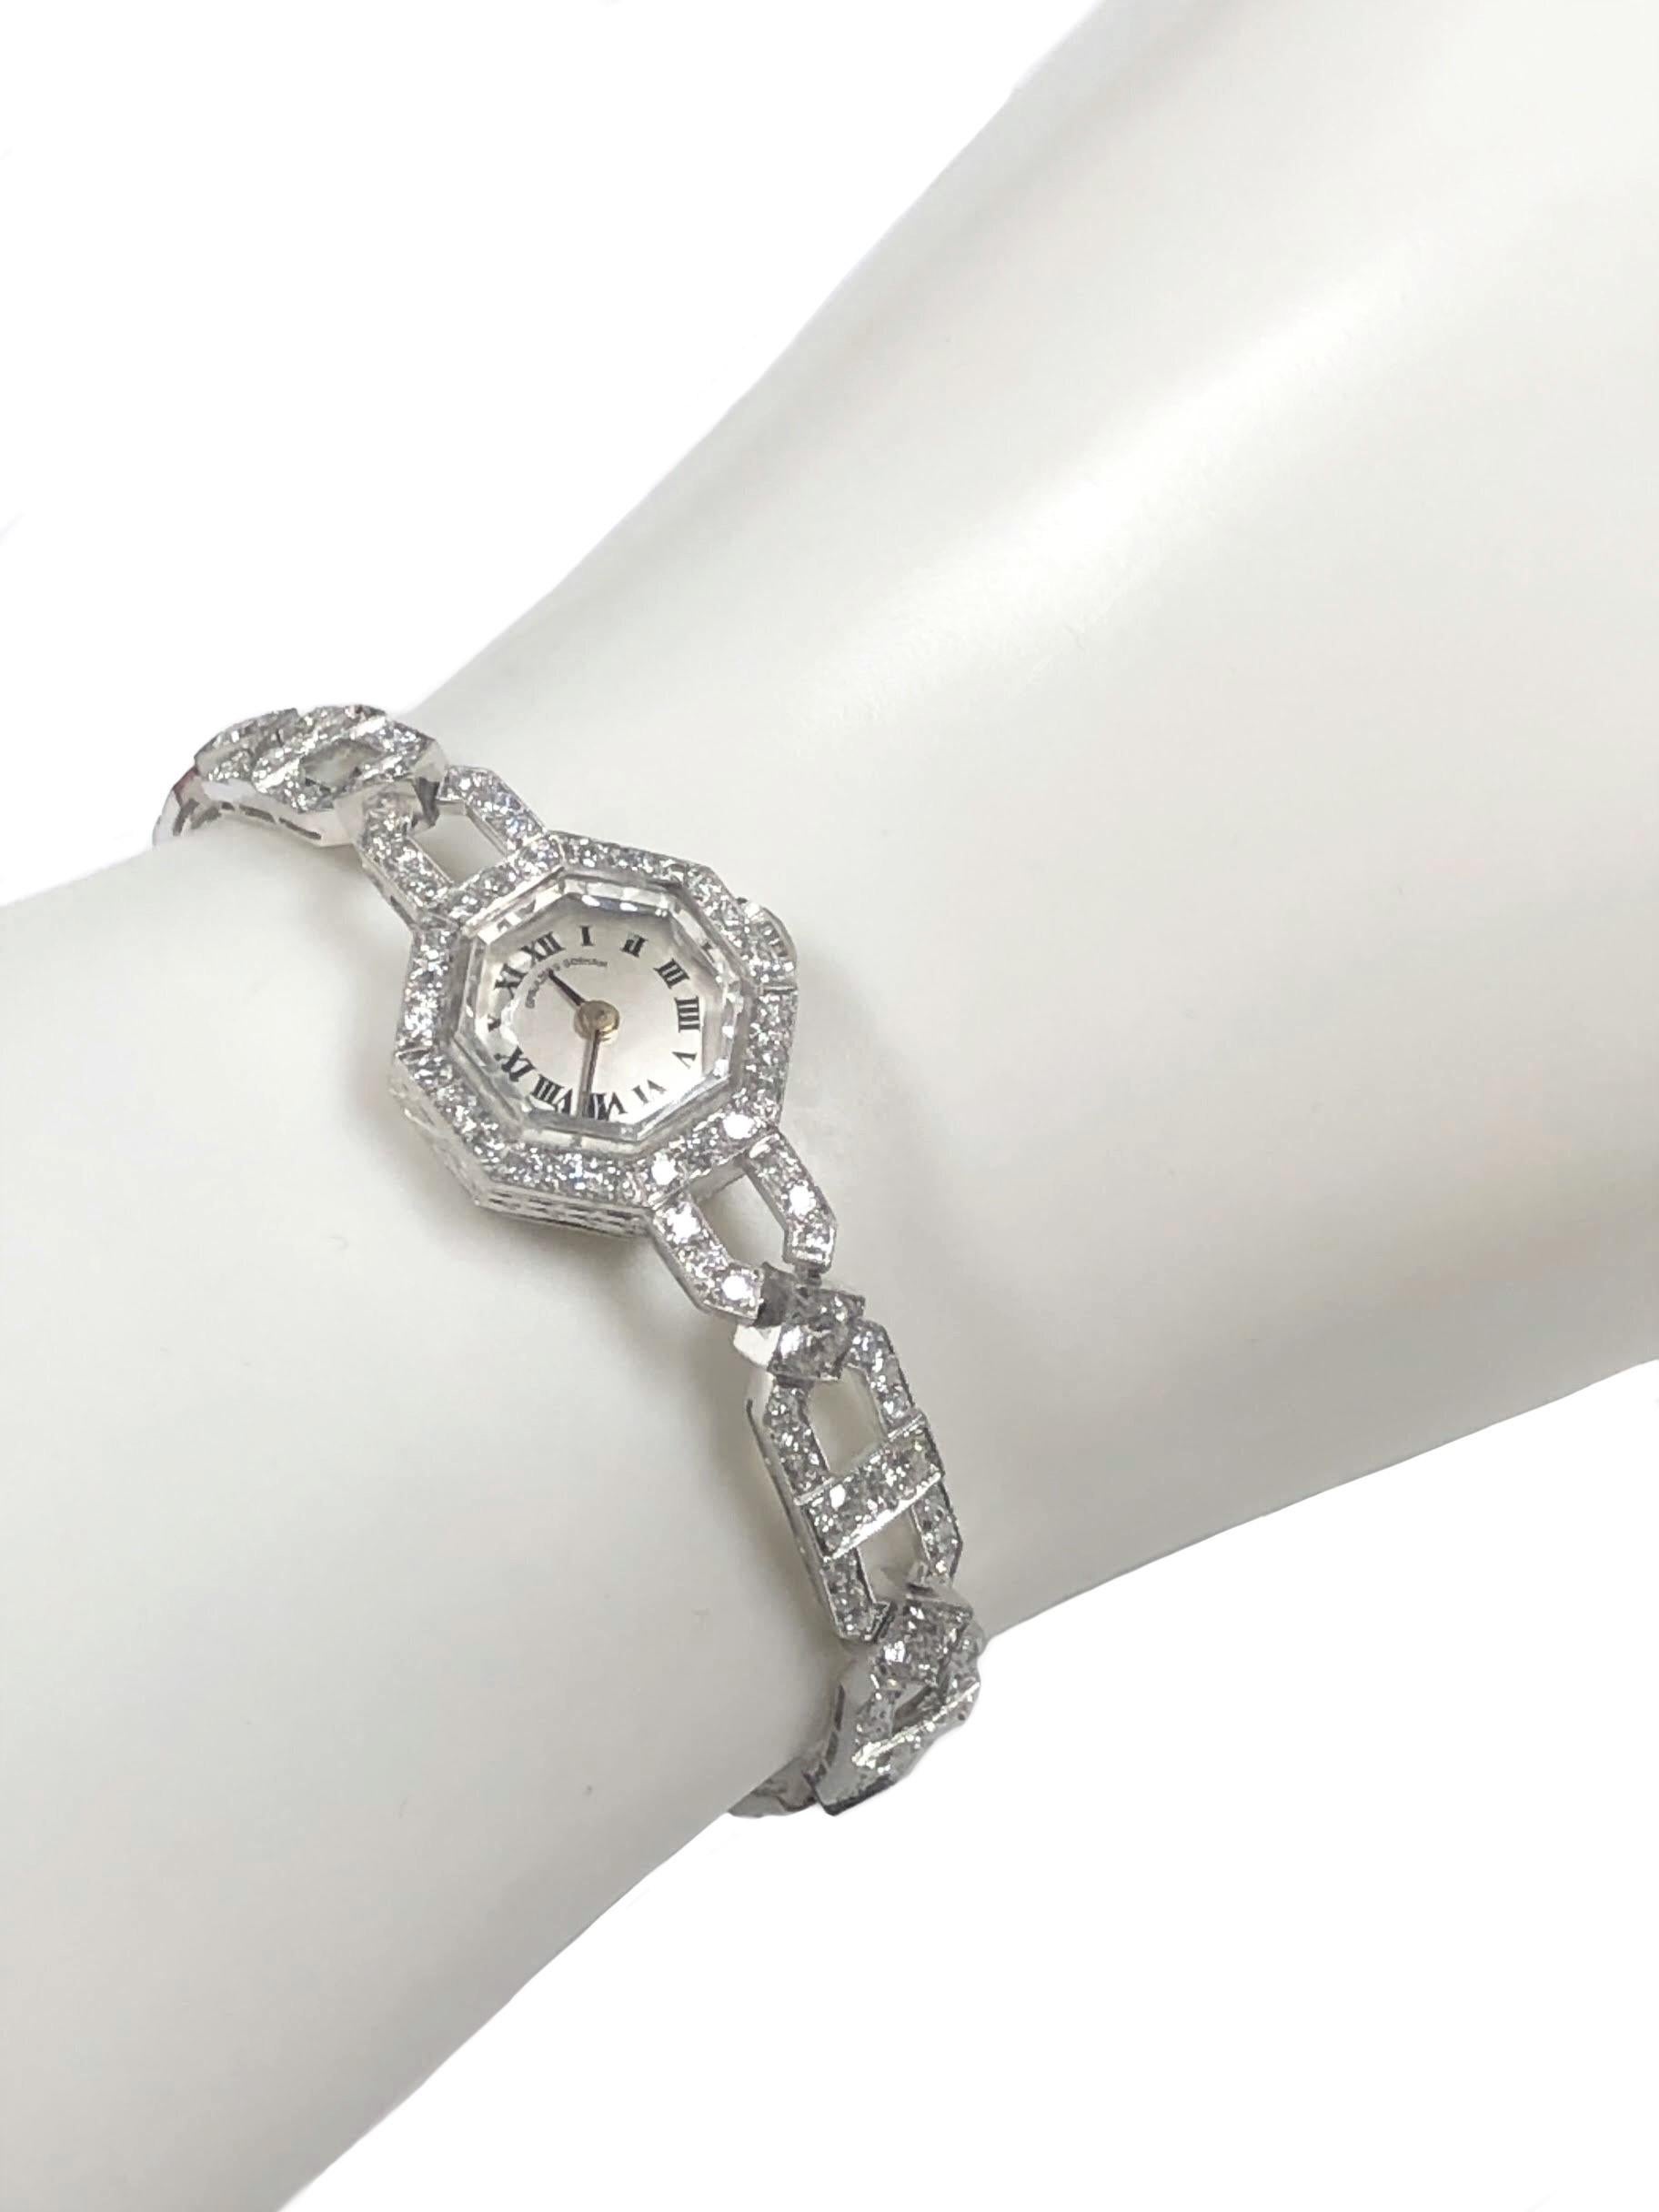 Spaulding Gorham Art Deco Ladies Platinum and Diamond Bracelet Watch 1